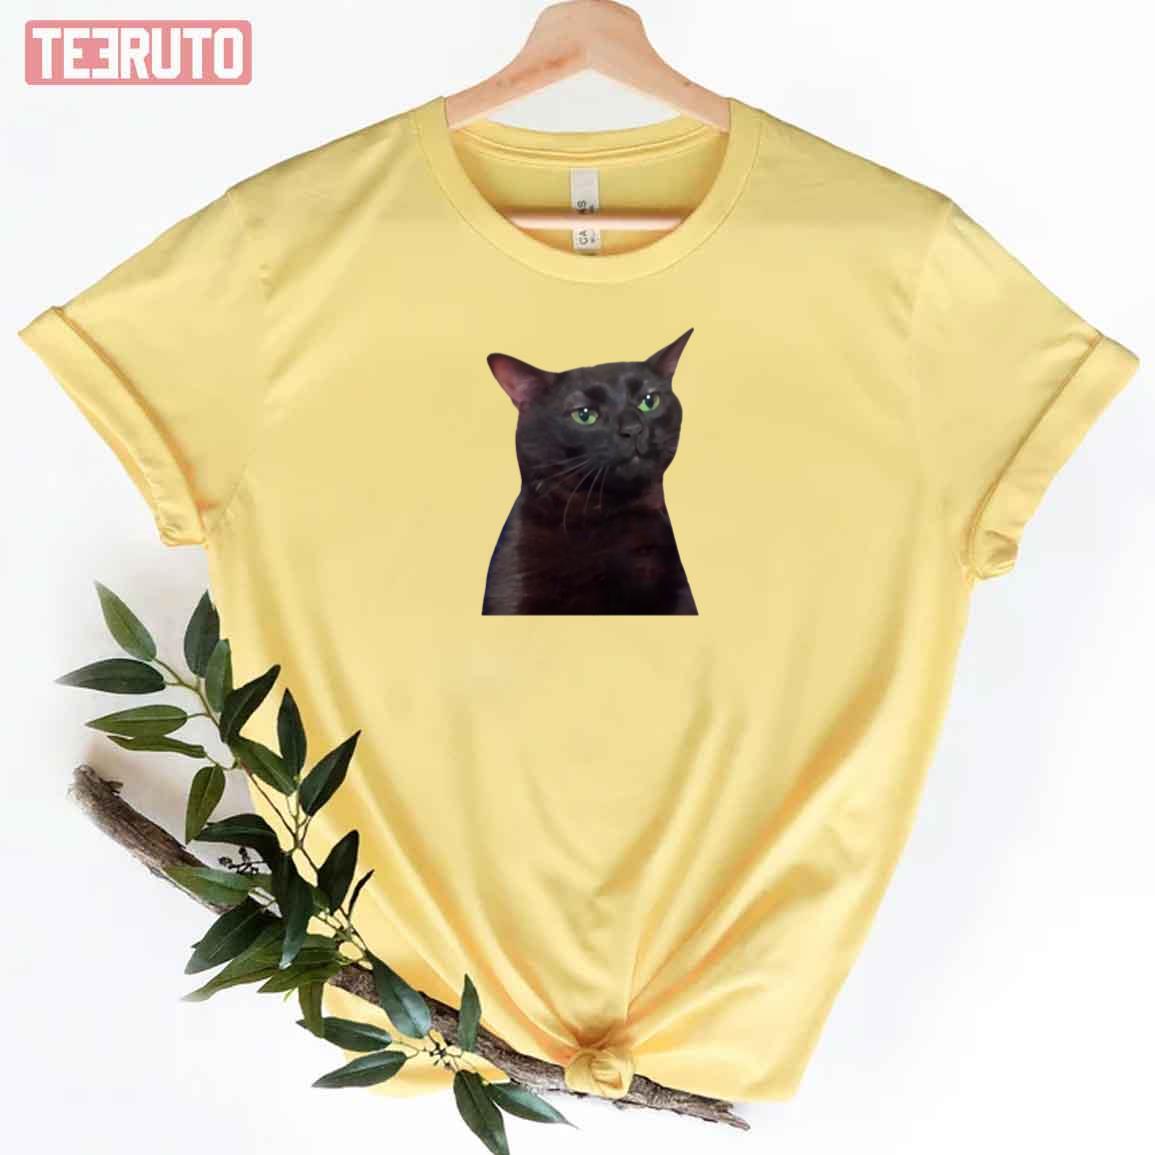 Zoned Out Cat Black Cat Unisex T-Shirt